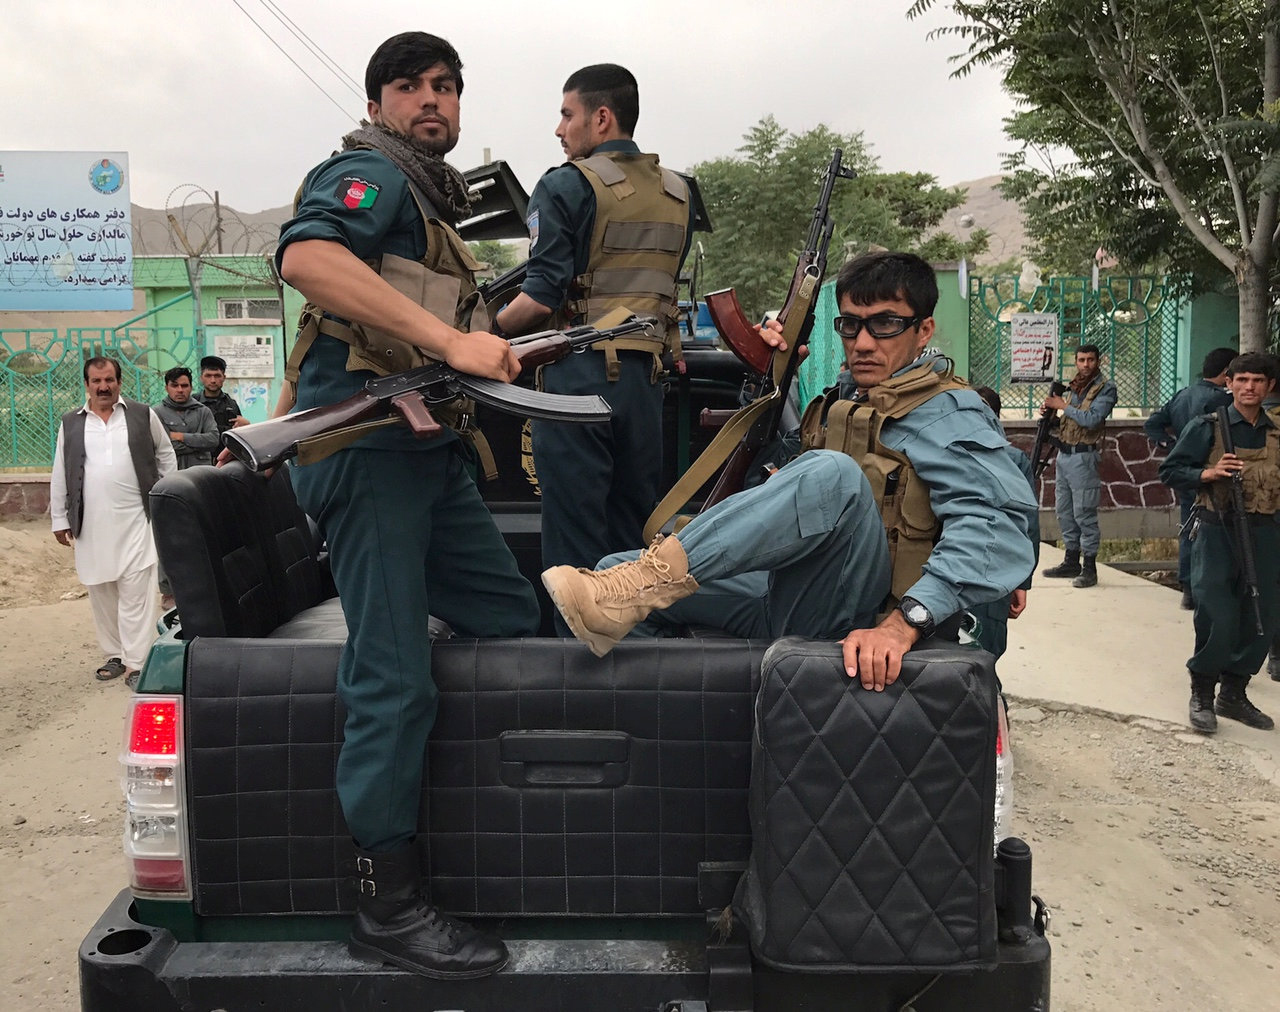 Afghan policemen arrive at the site of blasts in Kabul, Afghanistan June 3, 2017. Photo: REUTERS